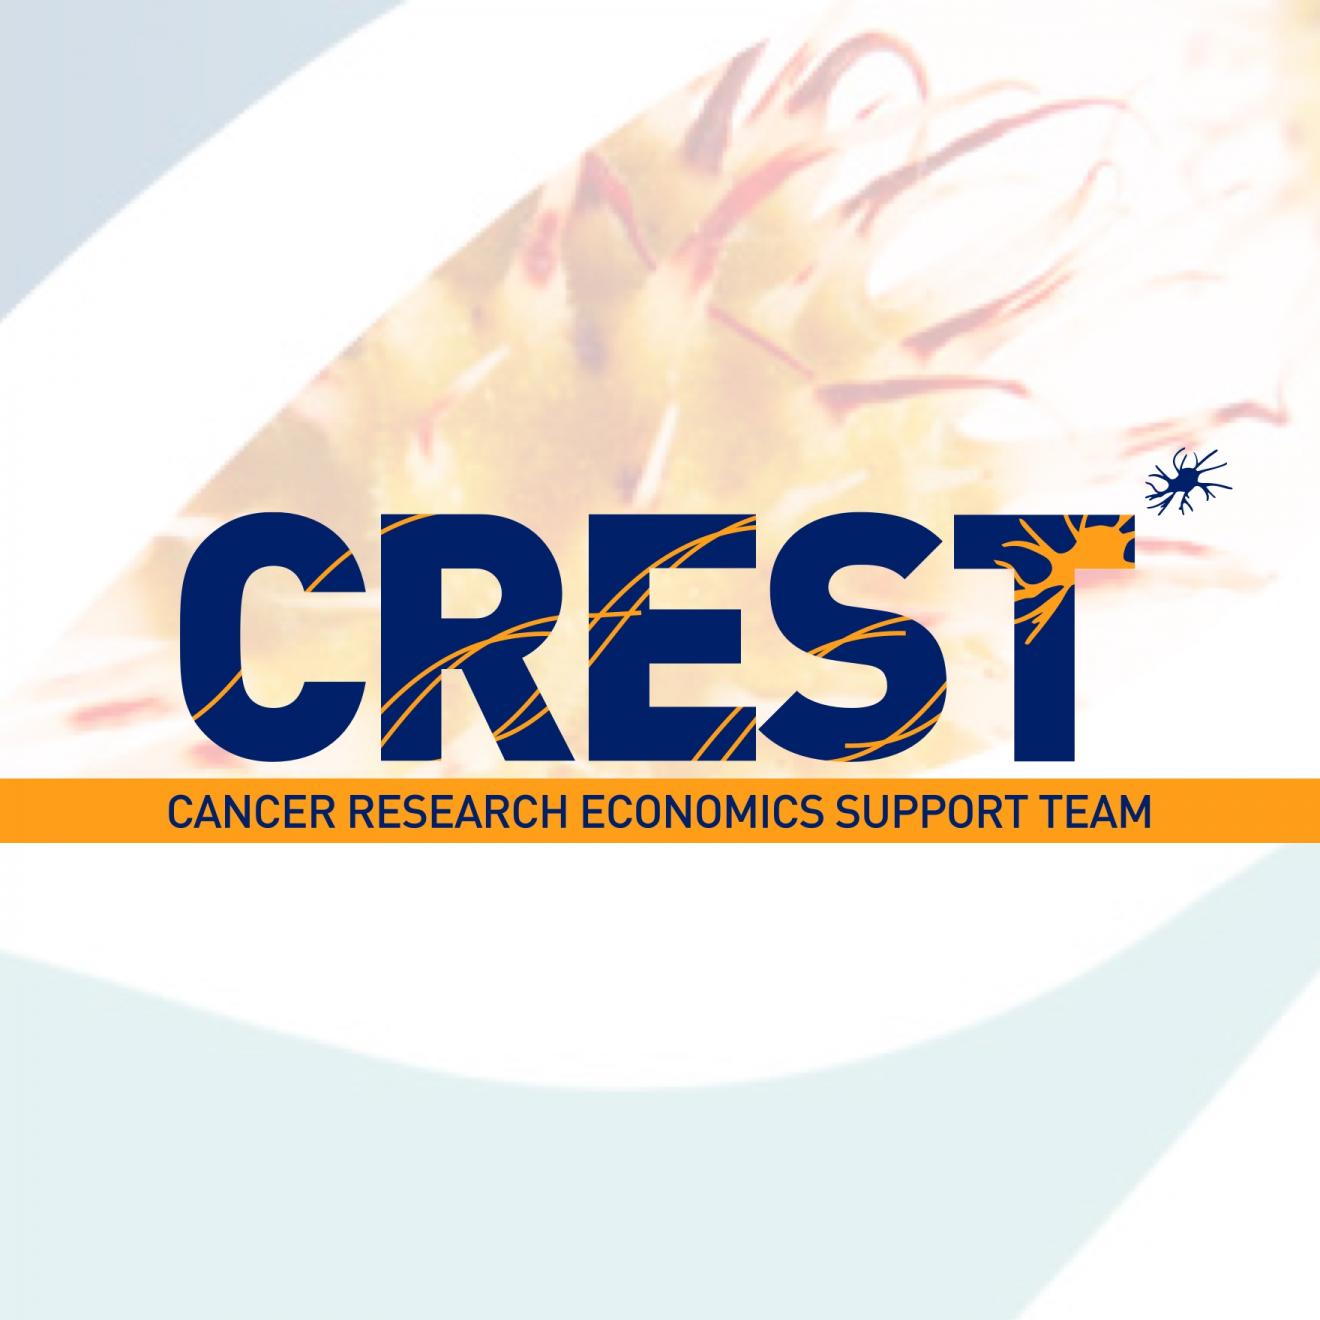 CREST logo